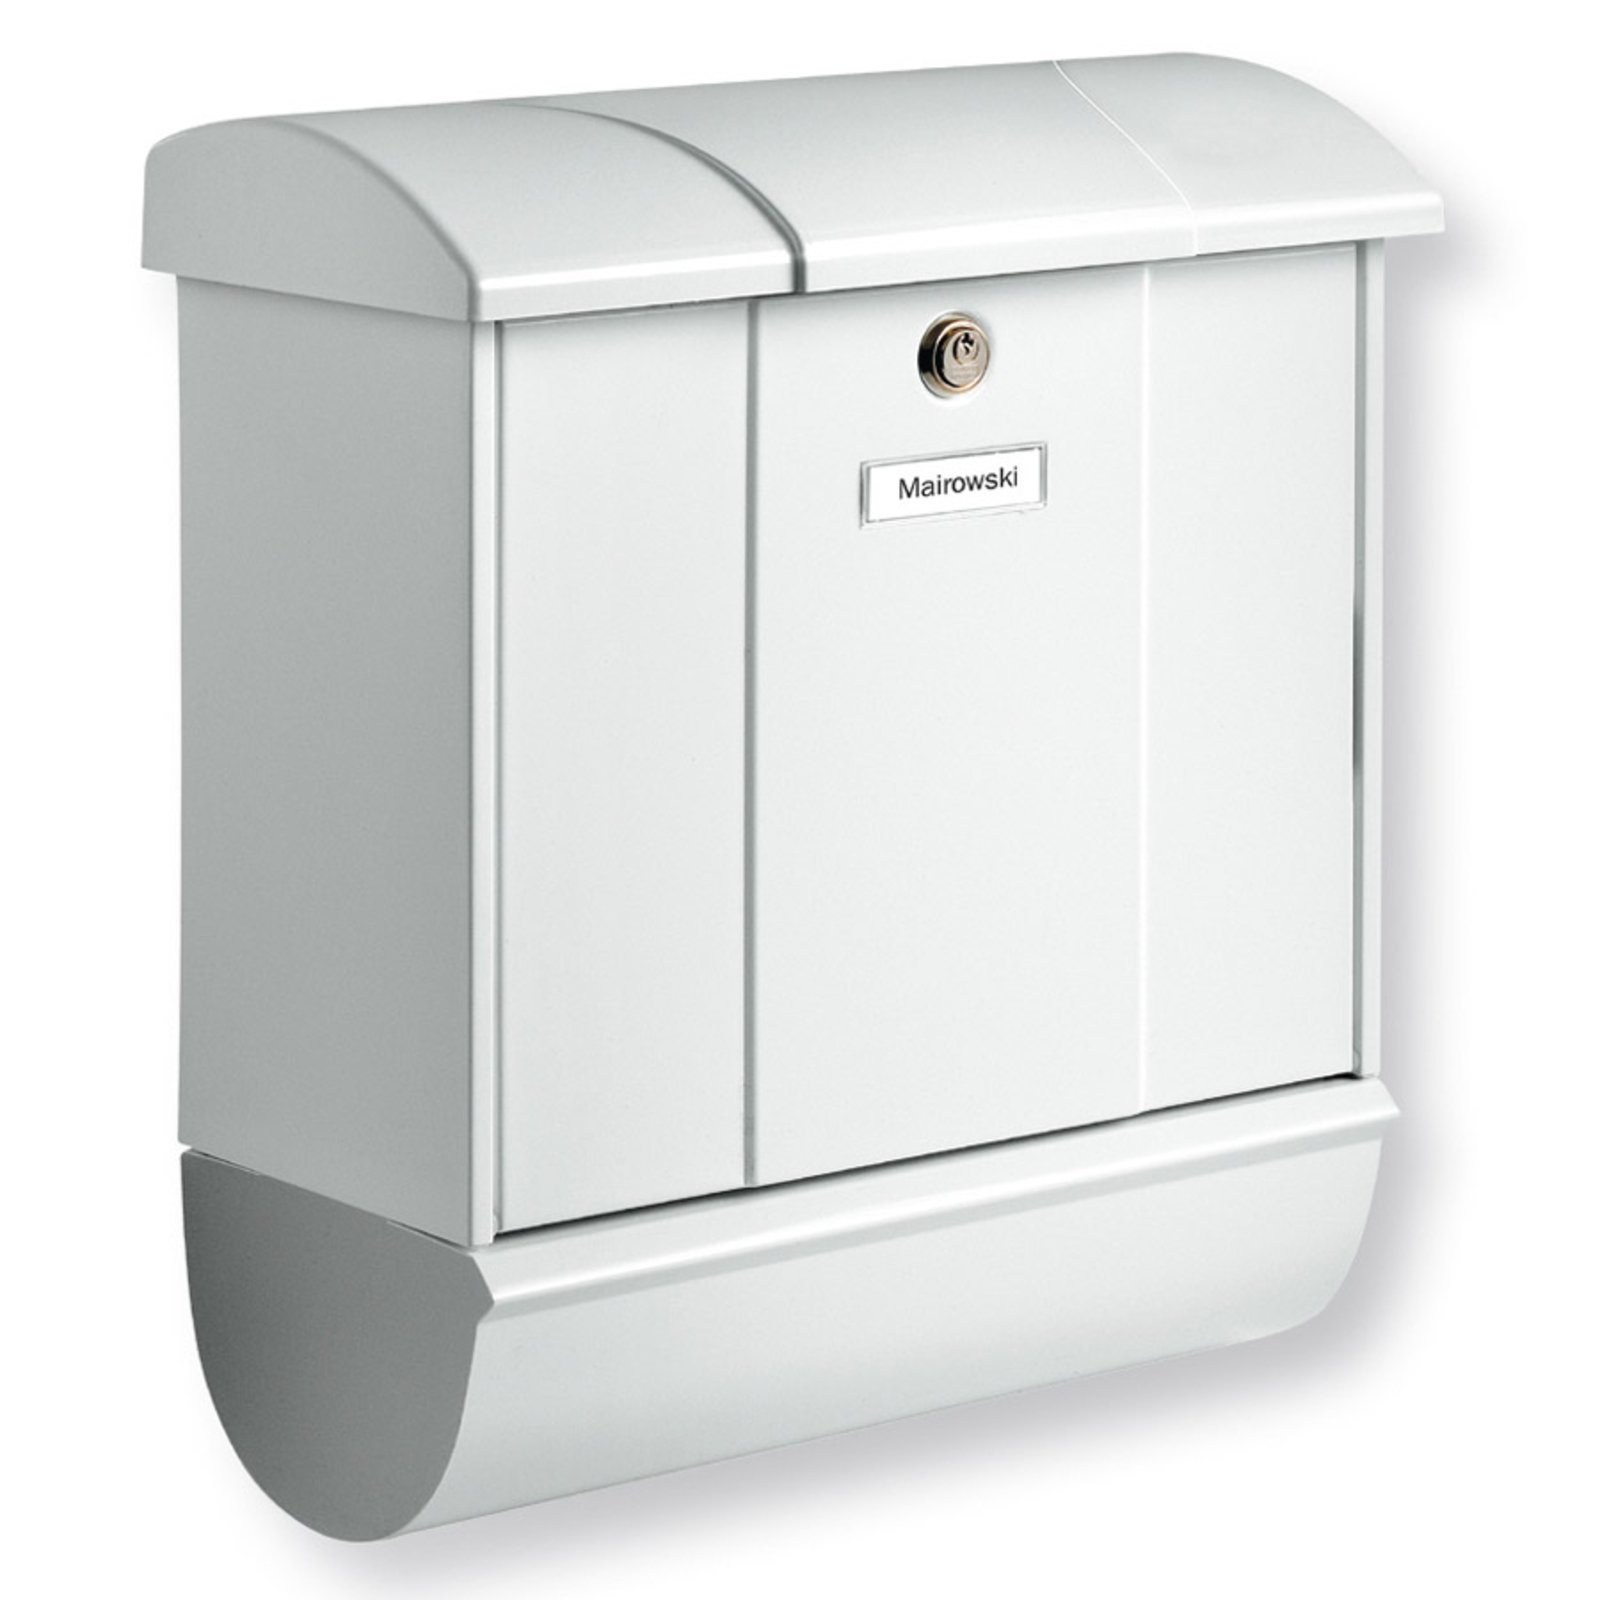 Olymp letterbox, newspaper holder, white